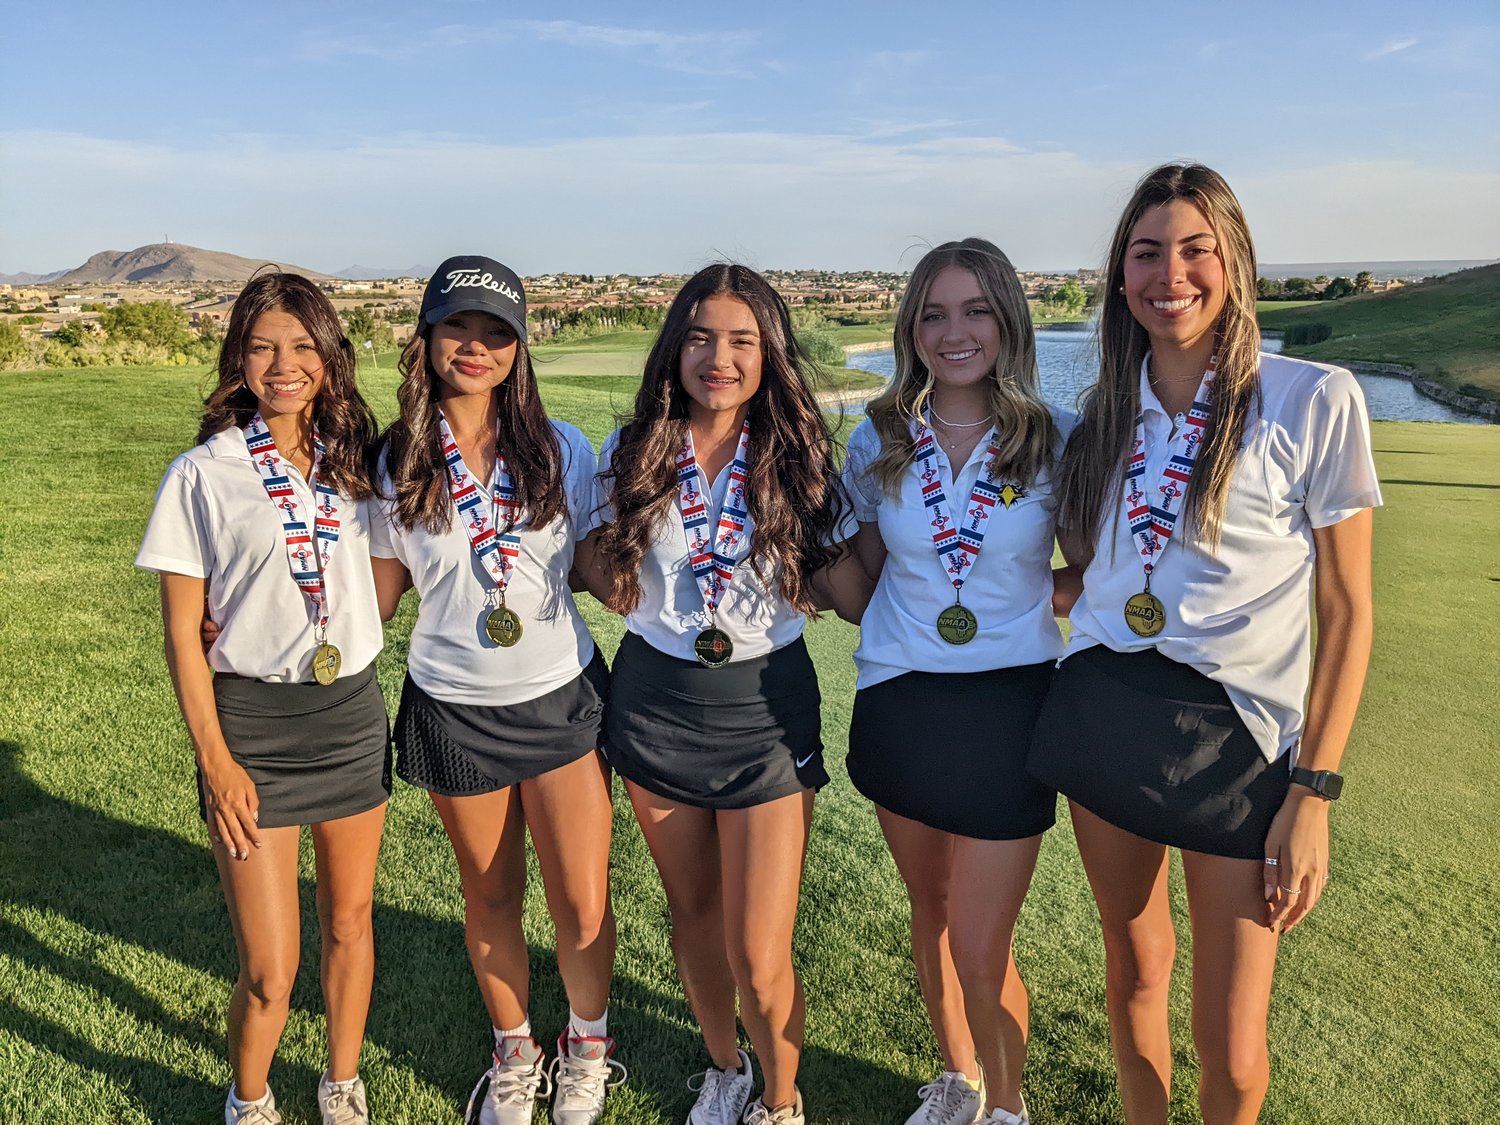 Centennial High golfers Arianna Rel, Brooklyn Maes, Alex Armendariz, Sidda Schultz and Paulina Cardenas at the Sonoma Ranch Golf Course.